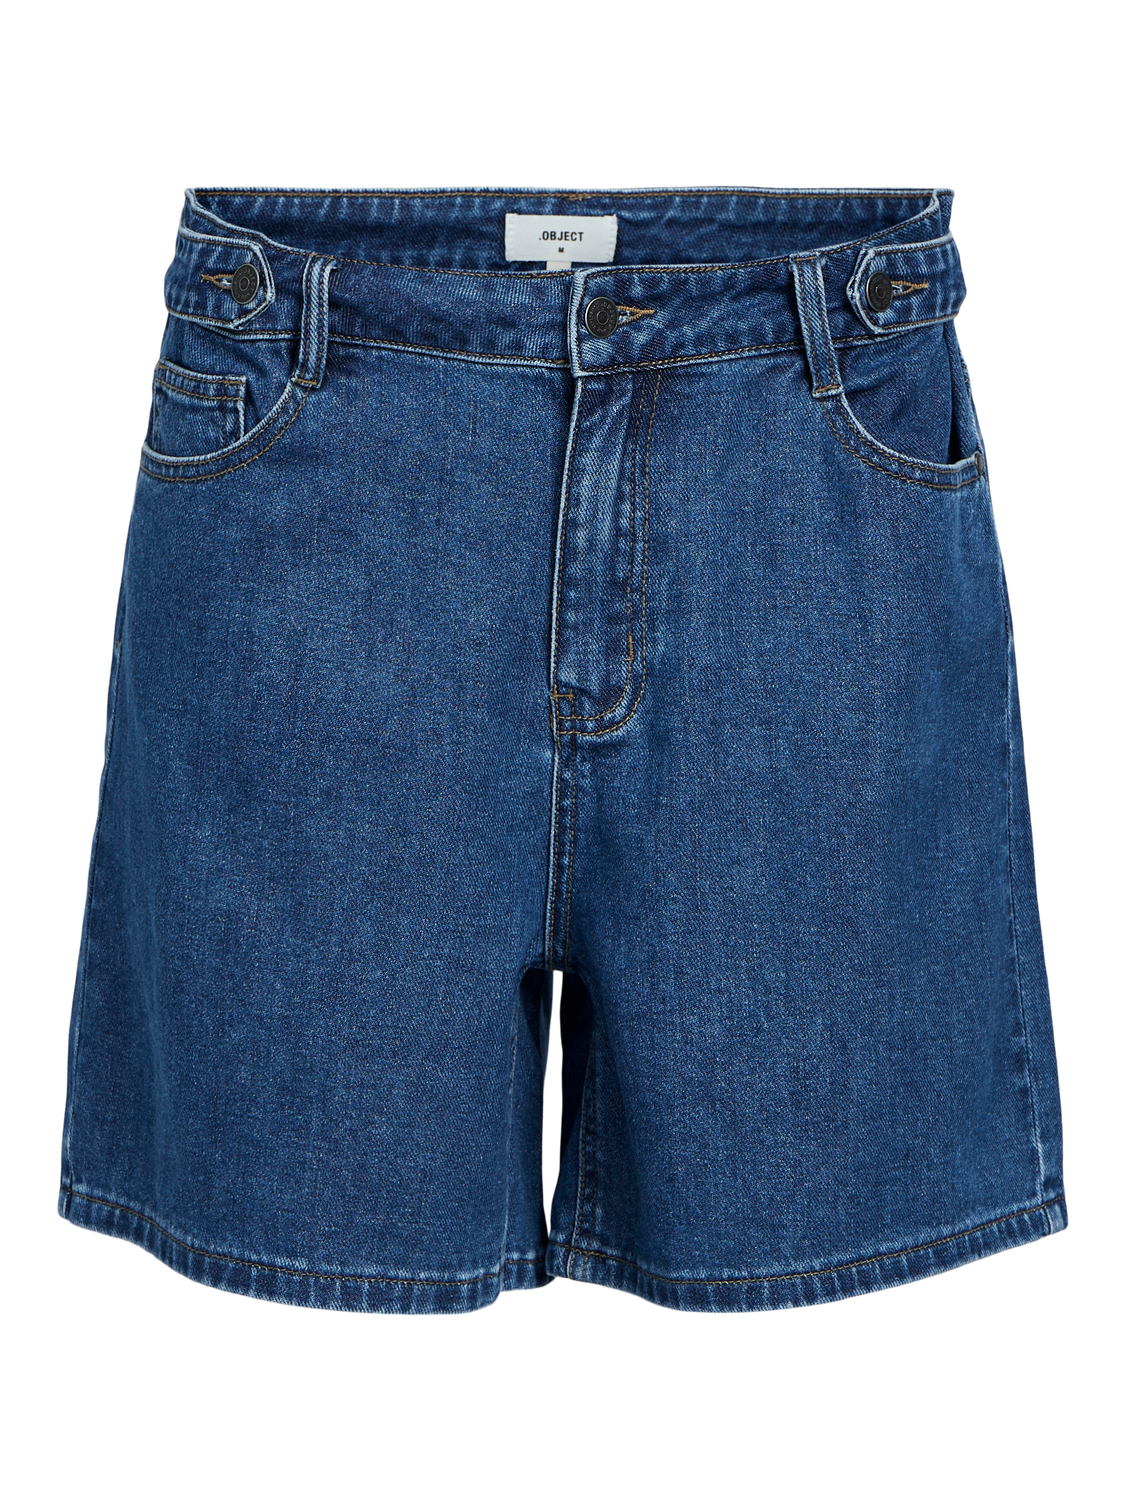 OBJGLORY Shorts - Medium Blue Denim